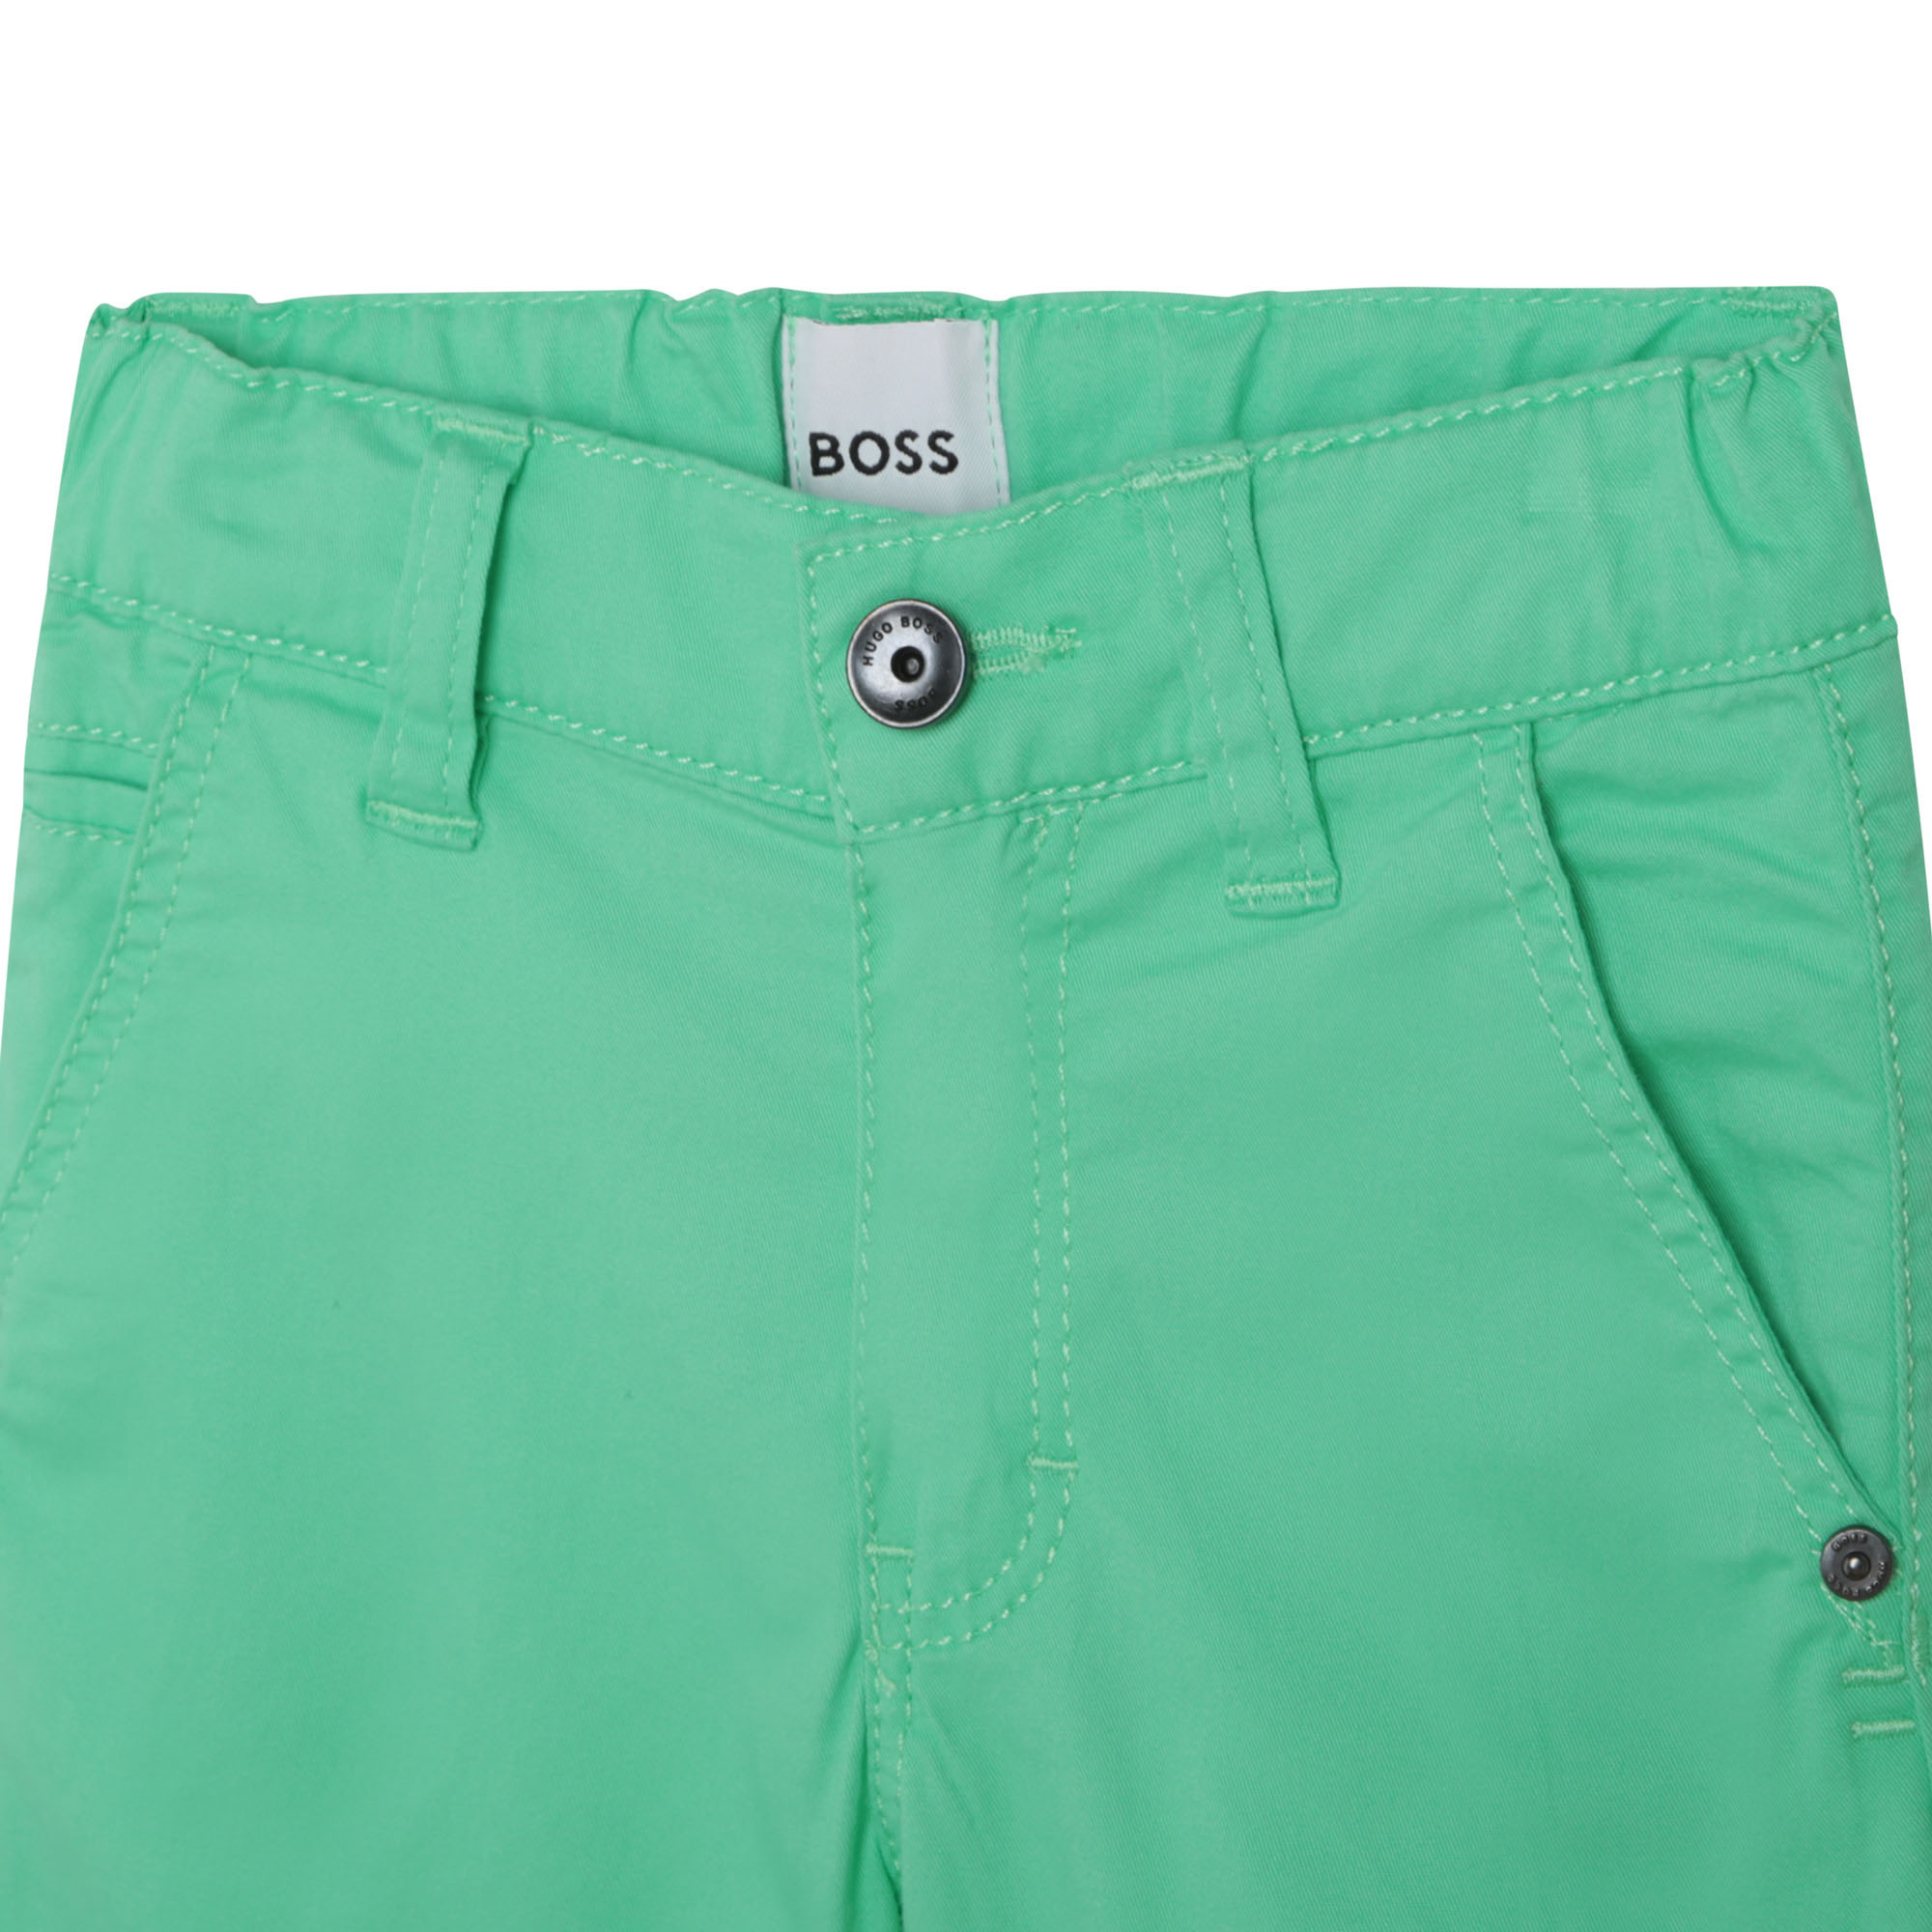 Bermuda shorts with logo label BOSS for BOY